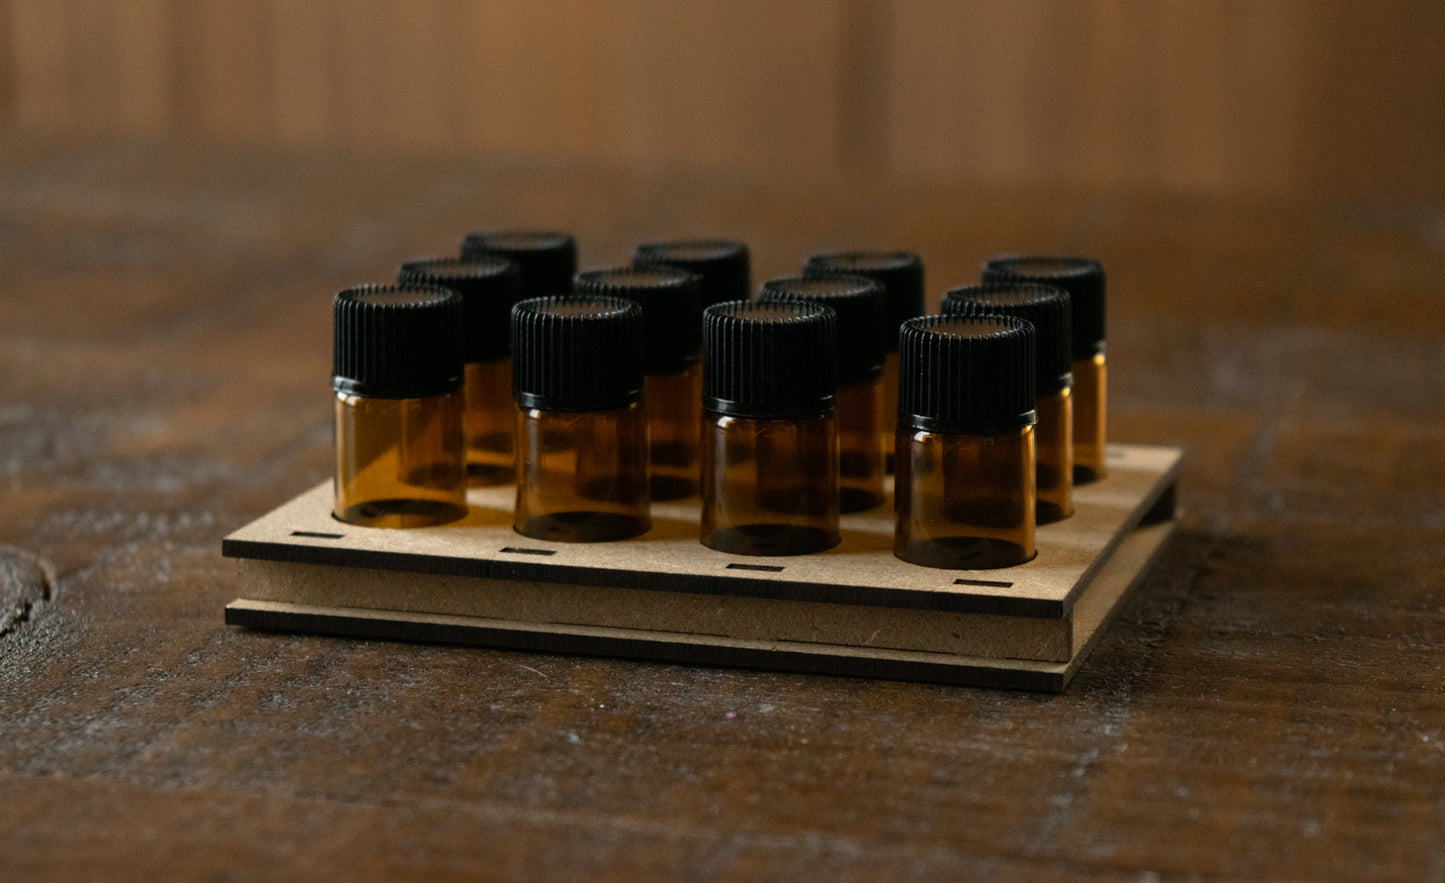 Perfumery ingredient kit - build your own